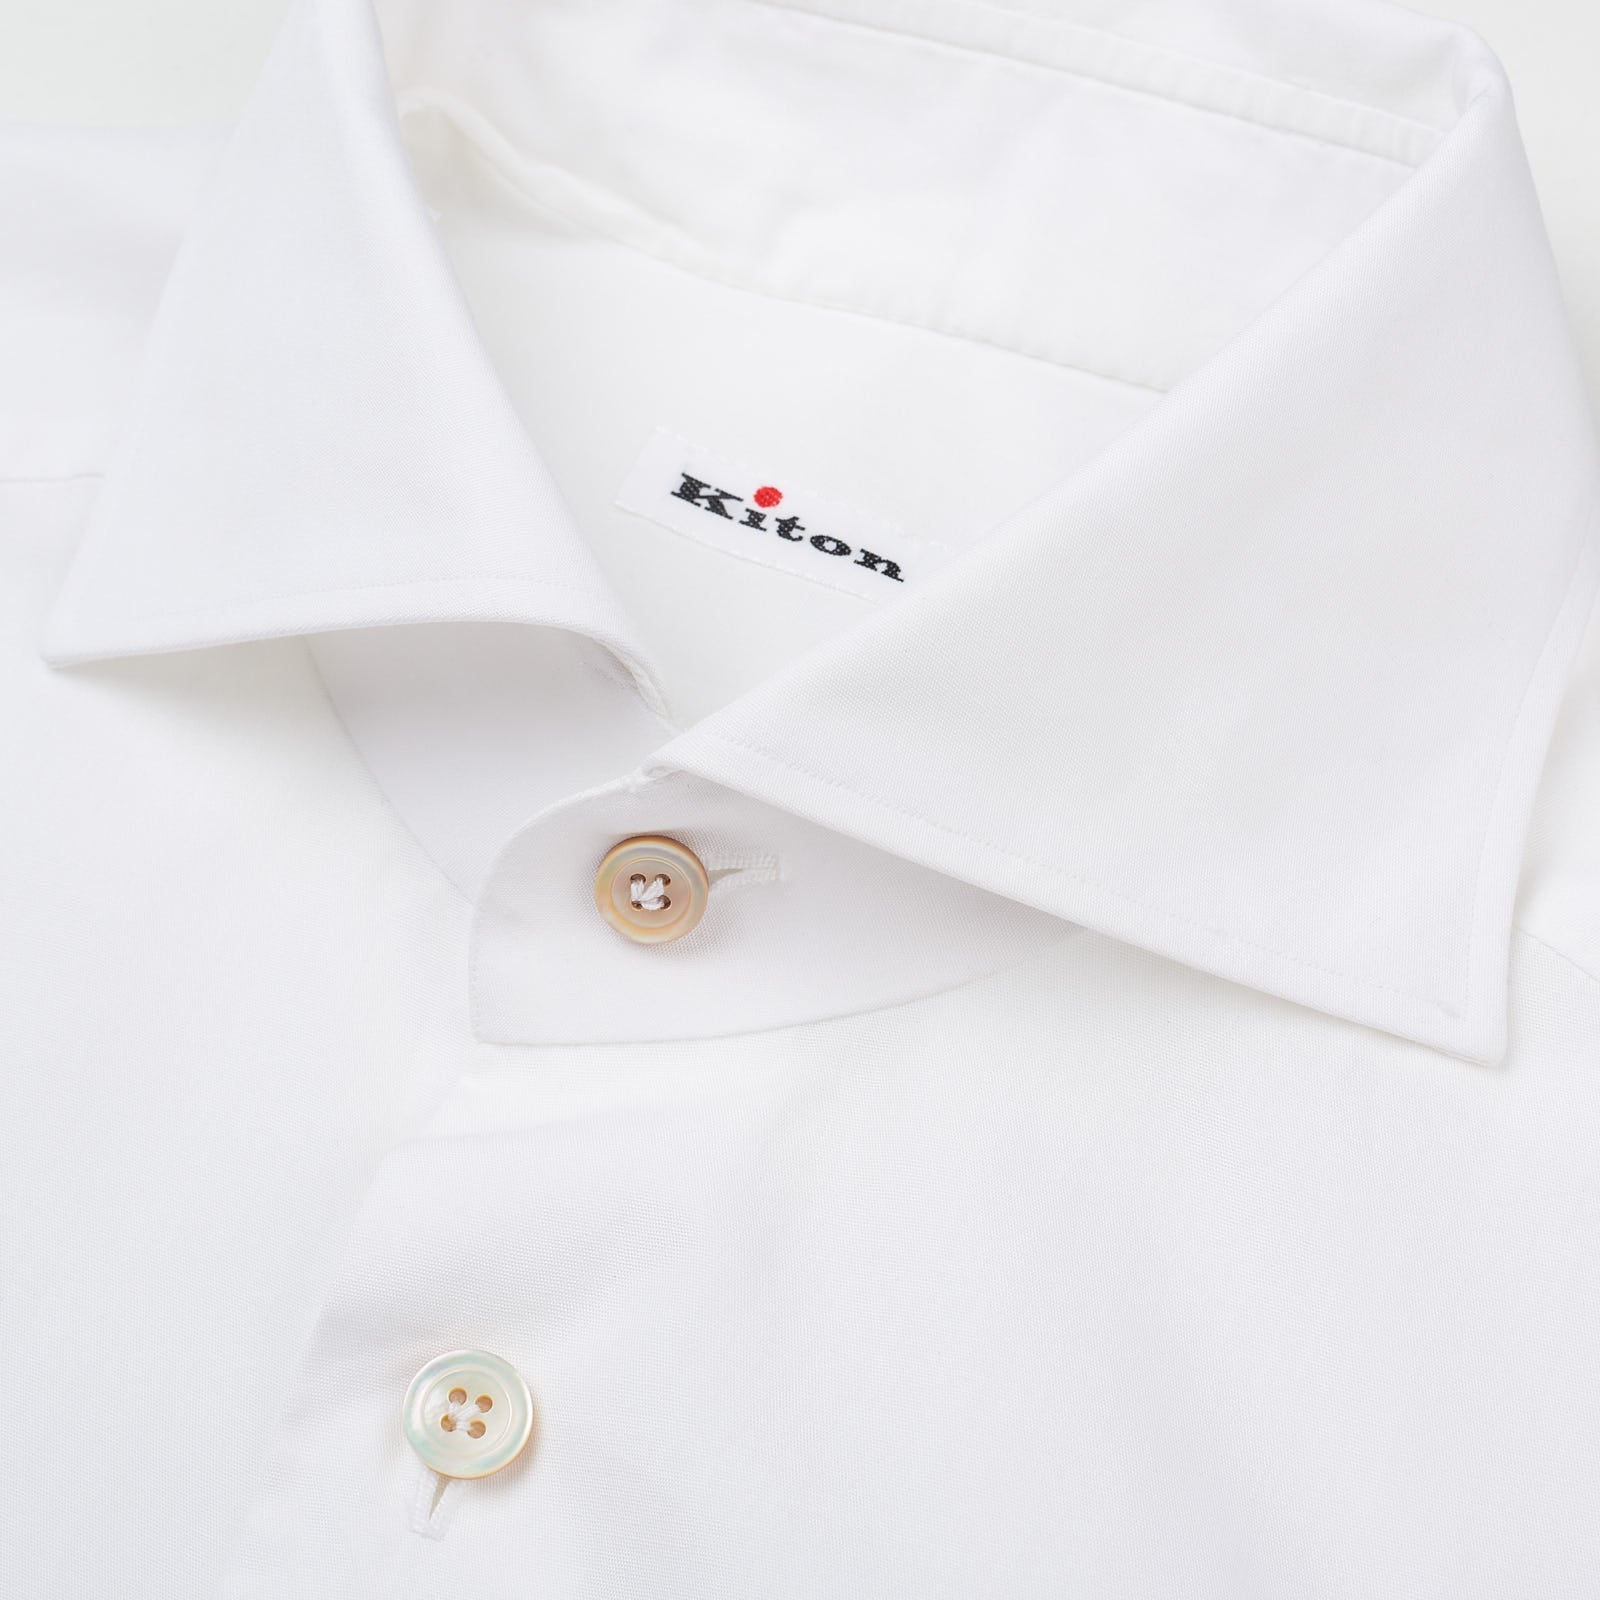 KITON Napoli Handmade Bespoke White Poplin Cotton Dress Shirt EU 39 NEW US 15.5 KITON